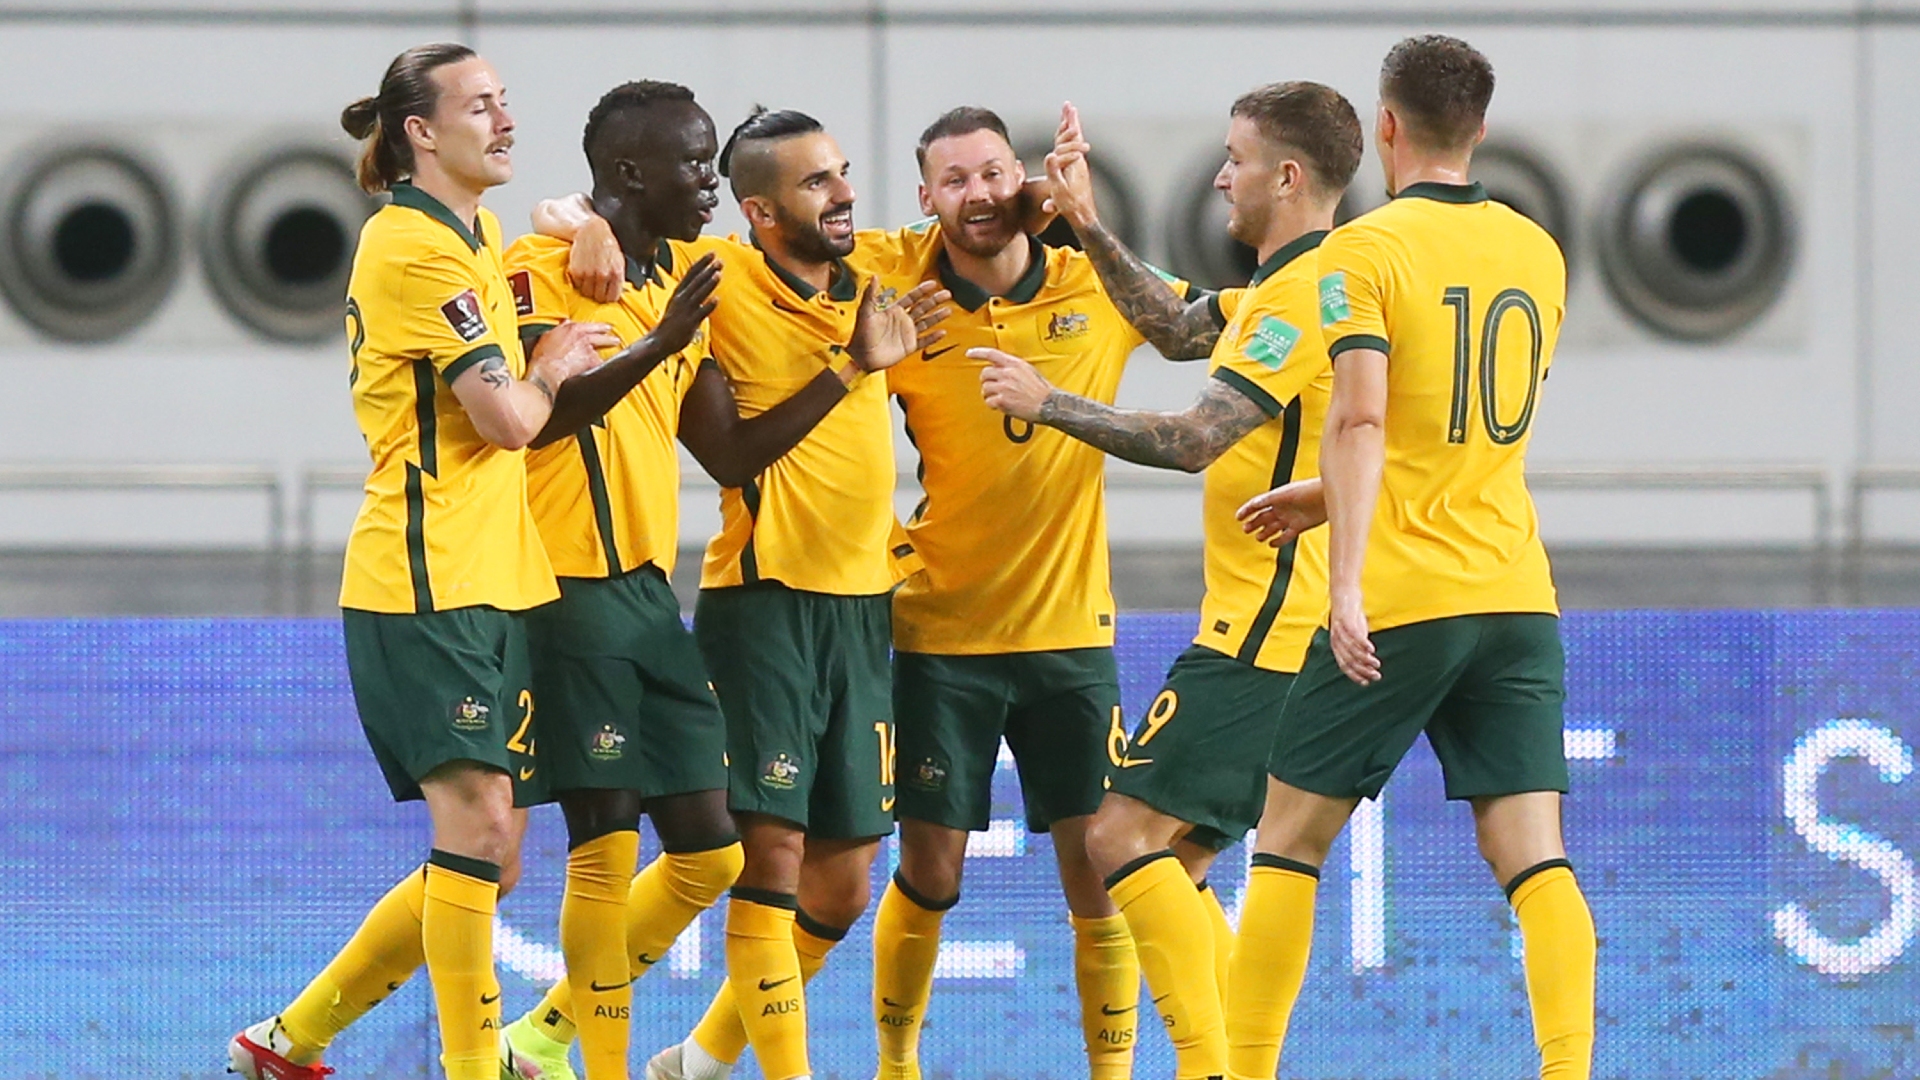 Socceroos 3 0 China: Boyle Stars As Australia Dominates World Cup Qualifying Opener